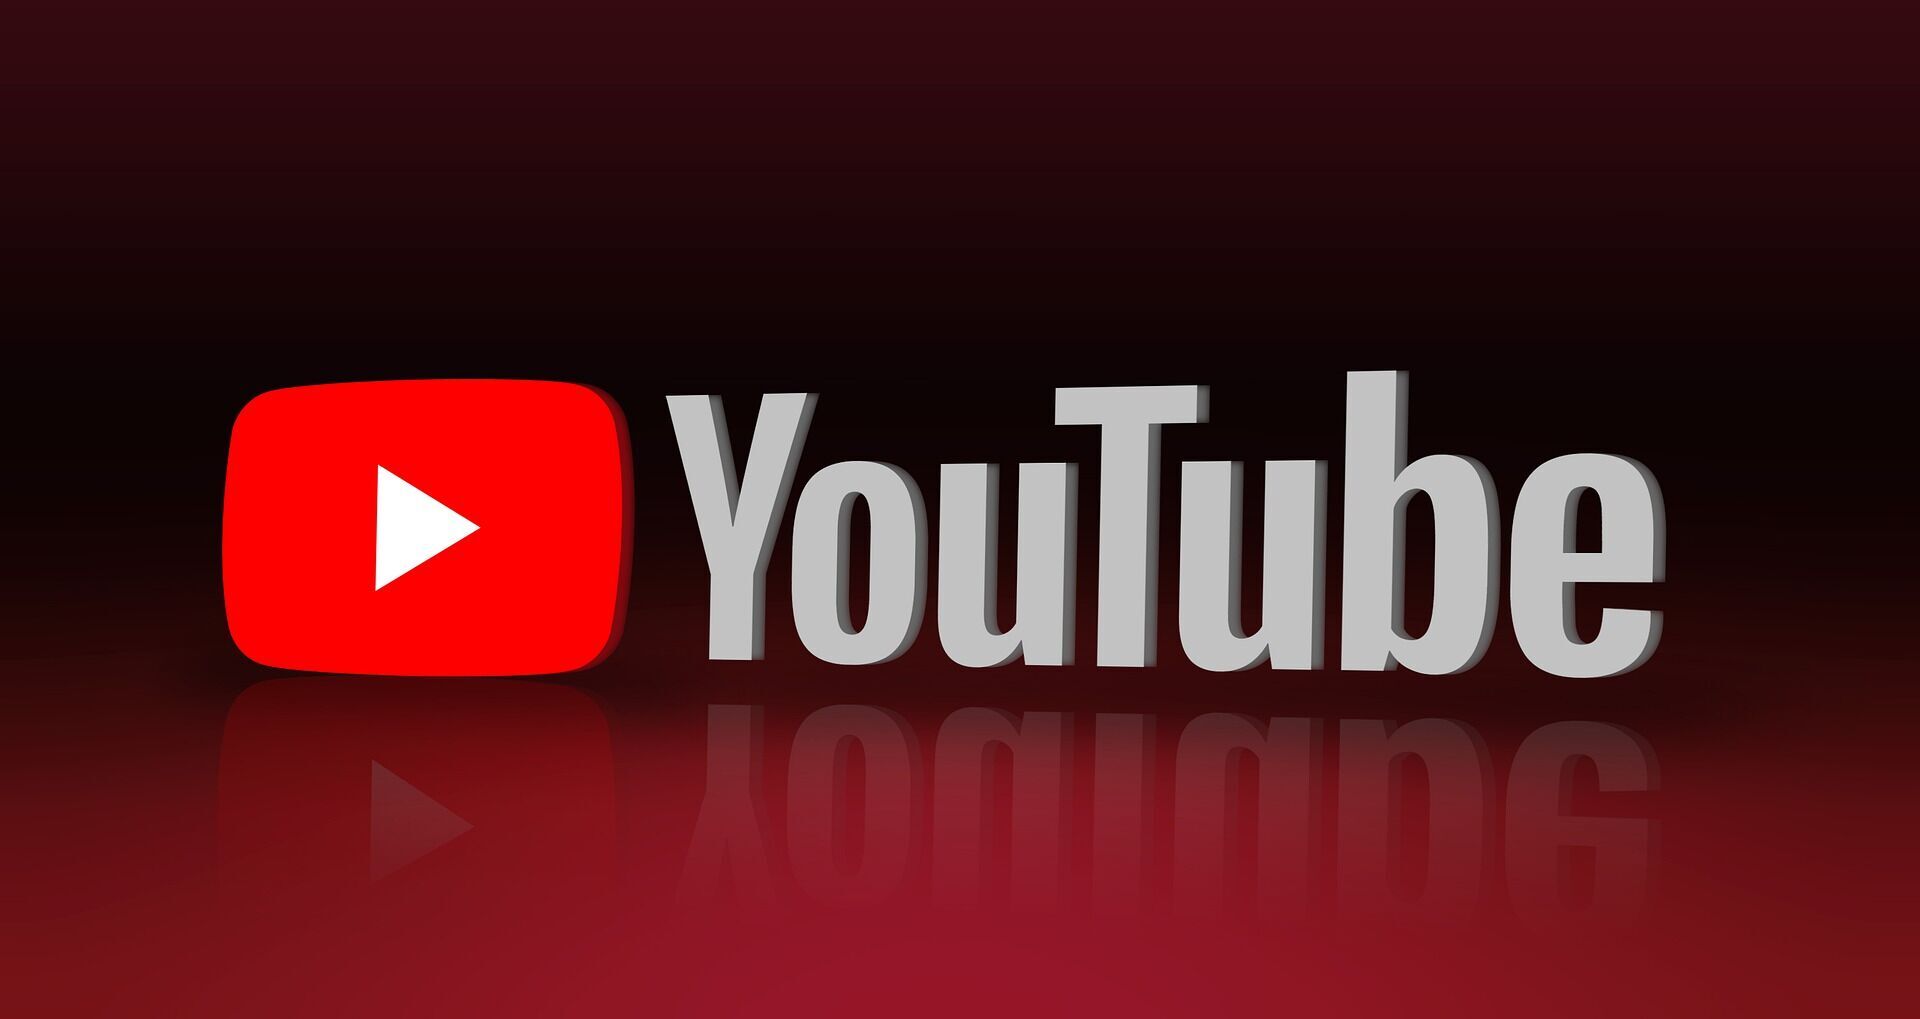 Google купила YouTube за 1,65 миллиарда долларов